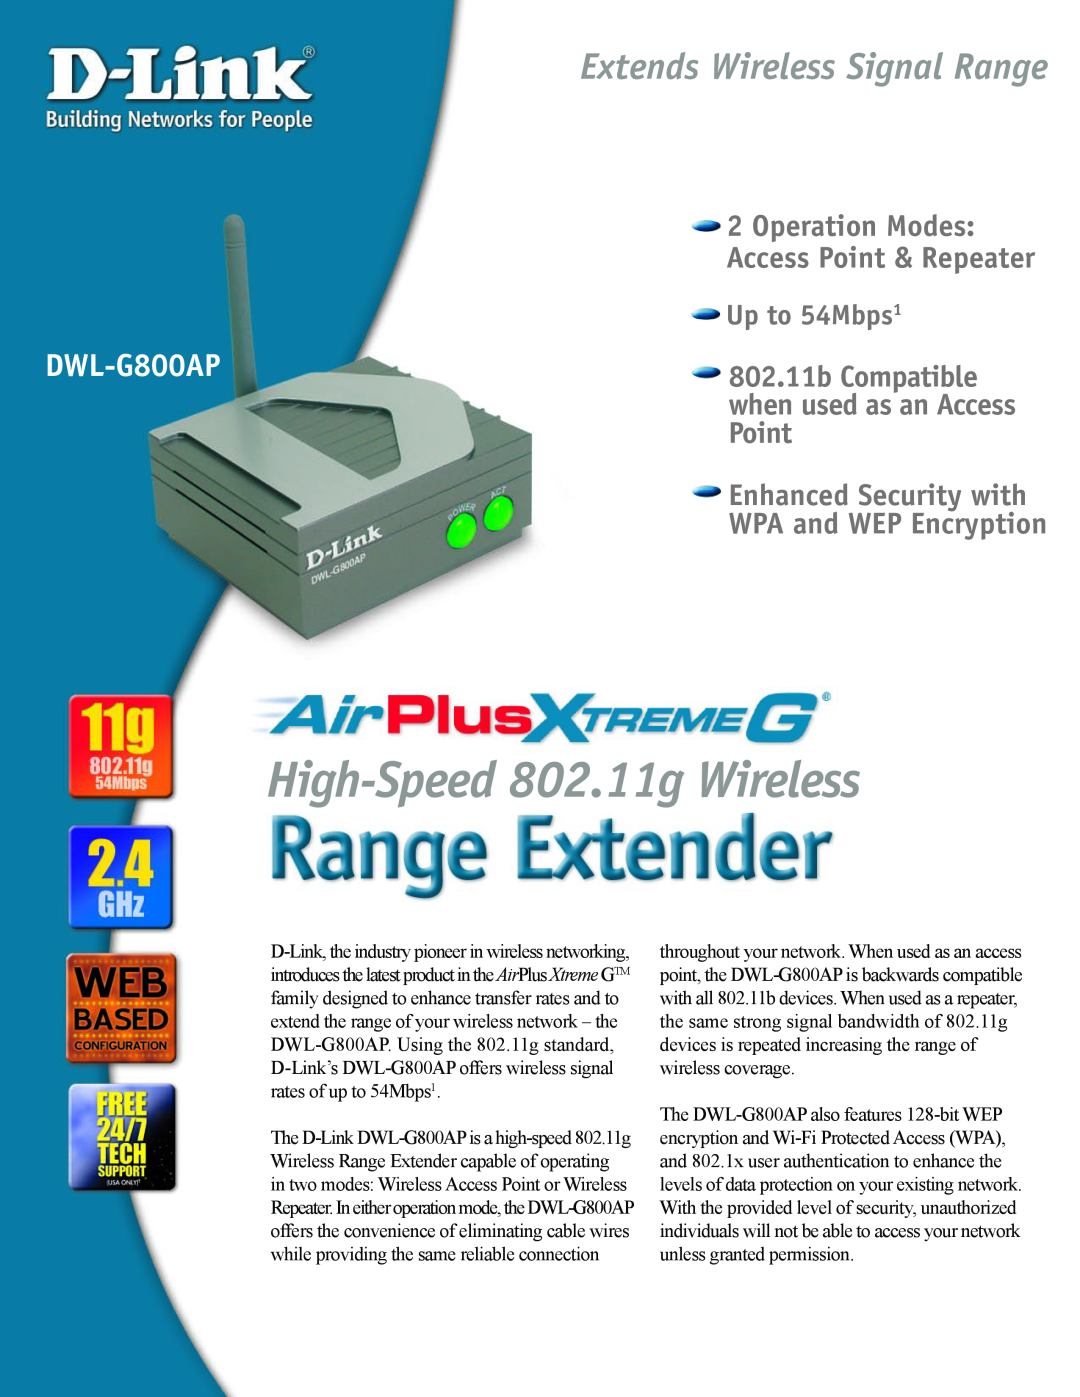 D-Link DWL-G800AP manual High-Speed 802.11g Wireless, Extends Wireless Signal Range, Operation Modes, 802.11b Compatible 